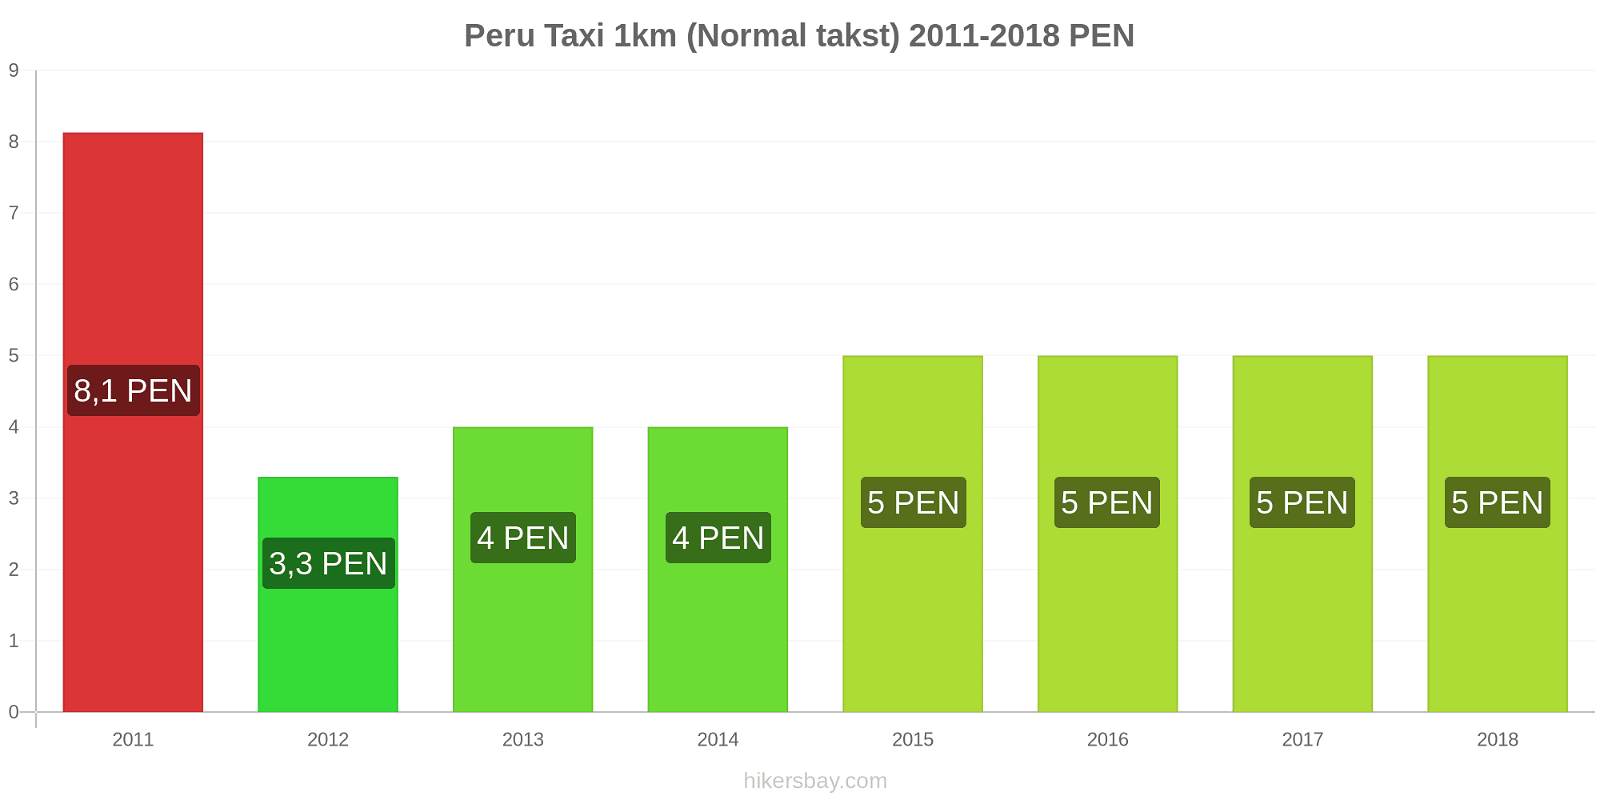 Peru prisændringer Taxi 1km (normal takst) hikersbay.com